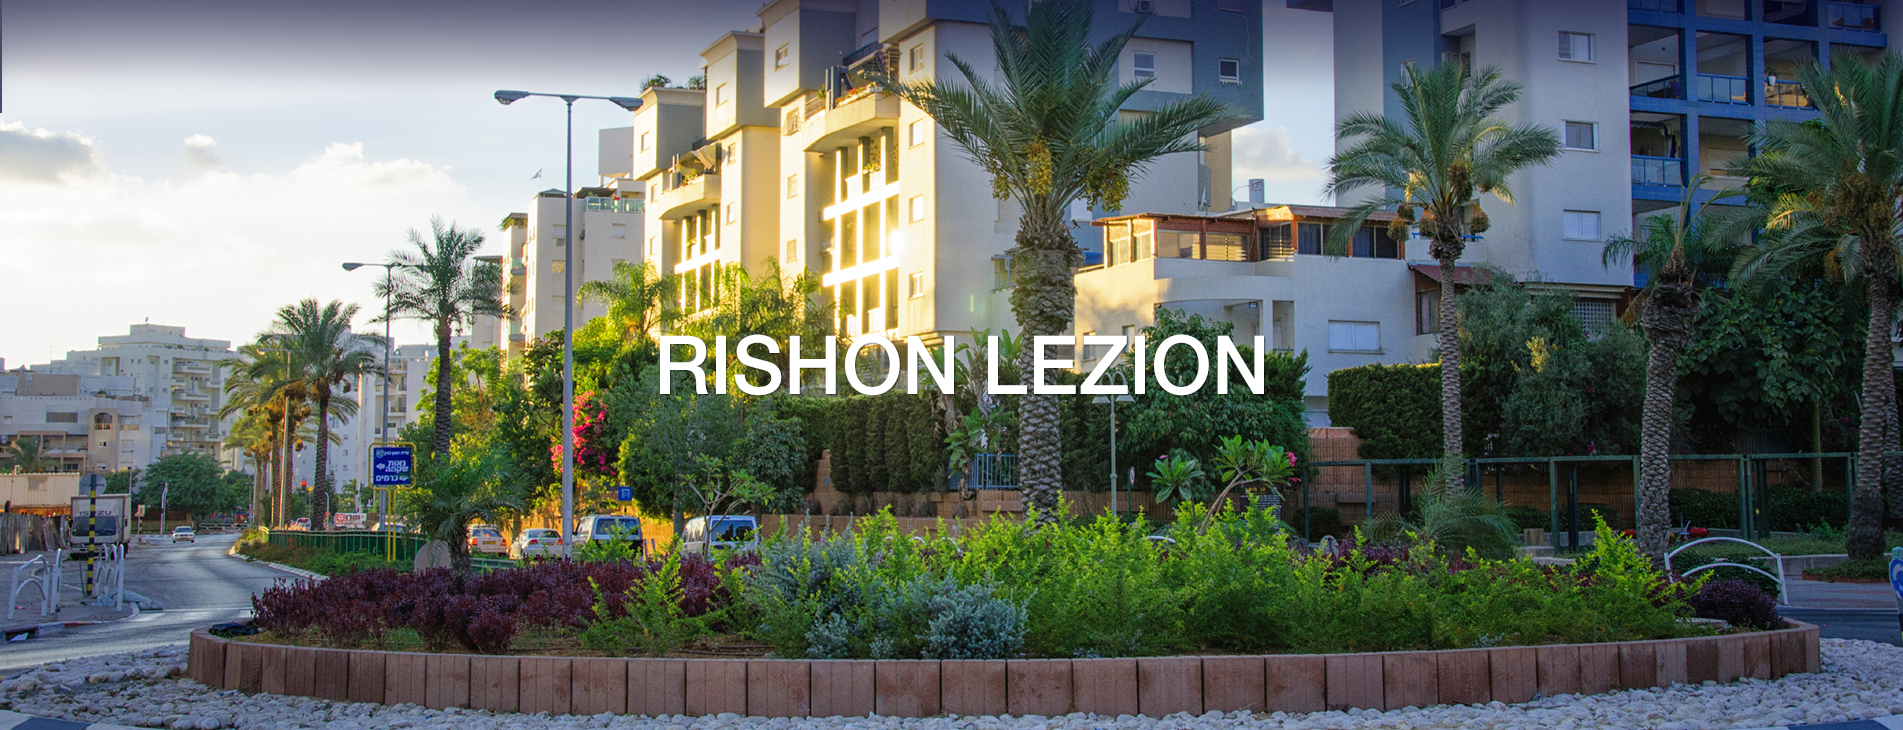 Rishon-Letsion2